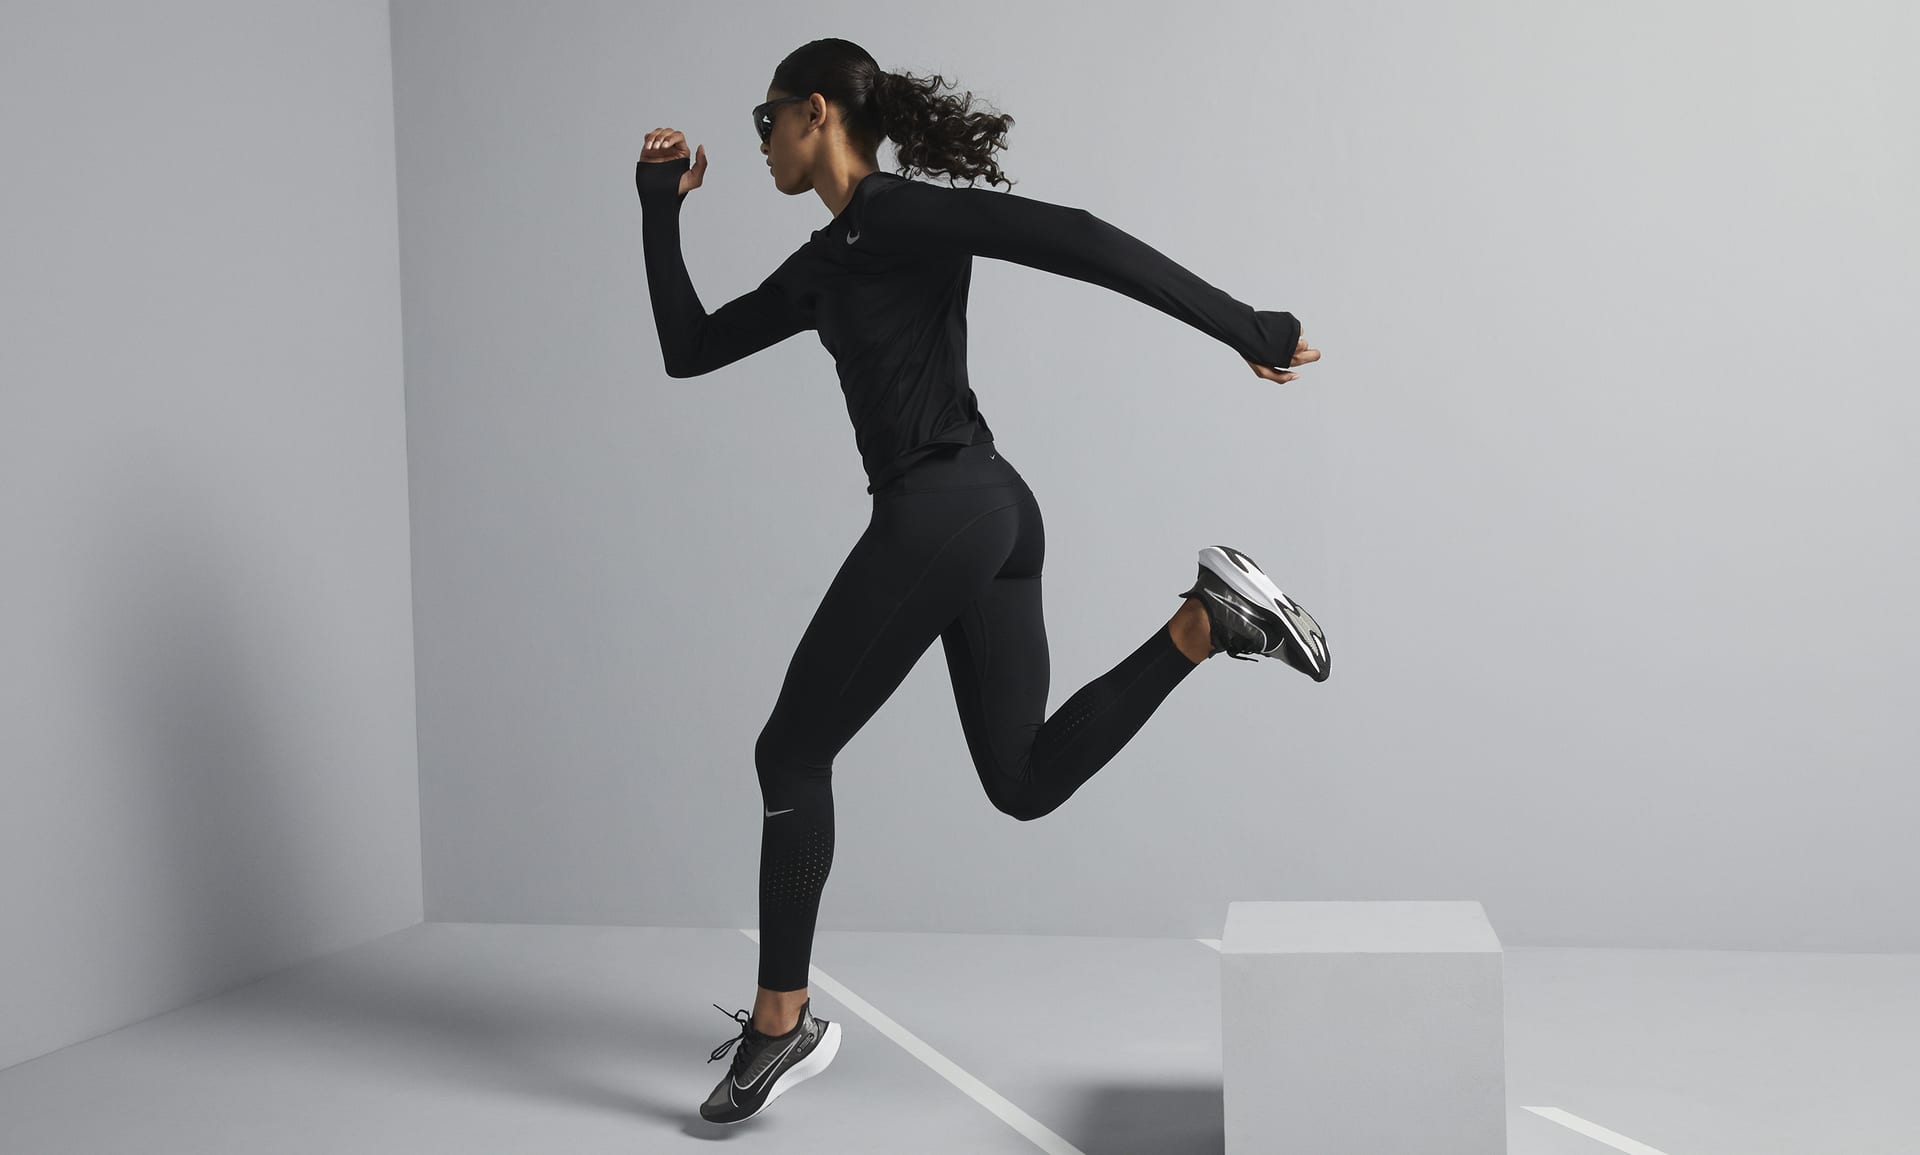 Nike Dri-FIT Run Division Epic Luxe Women s Running Leggings 